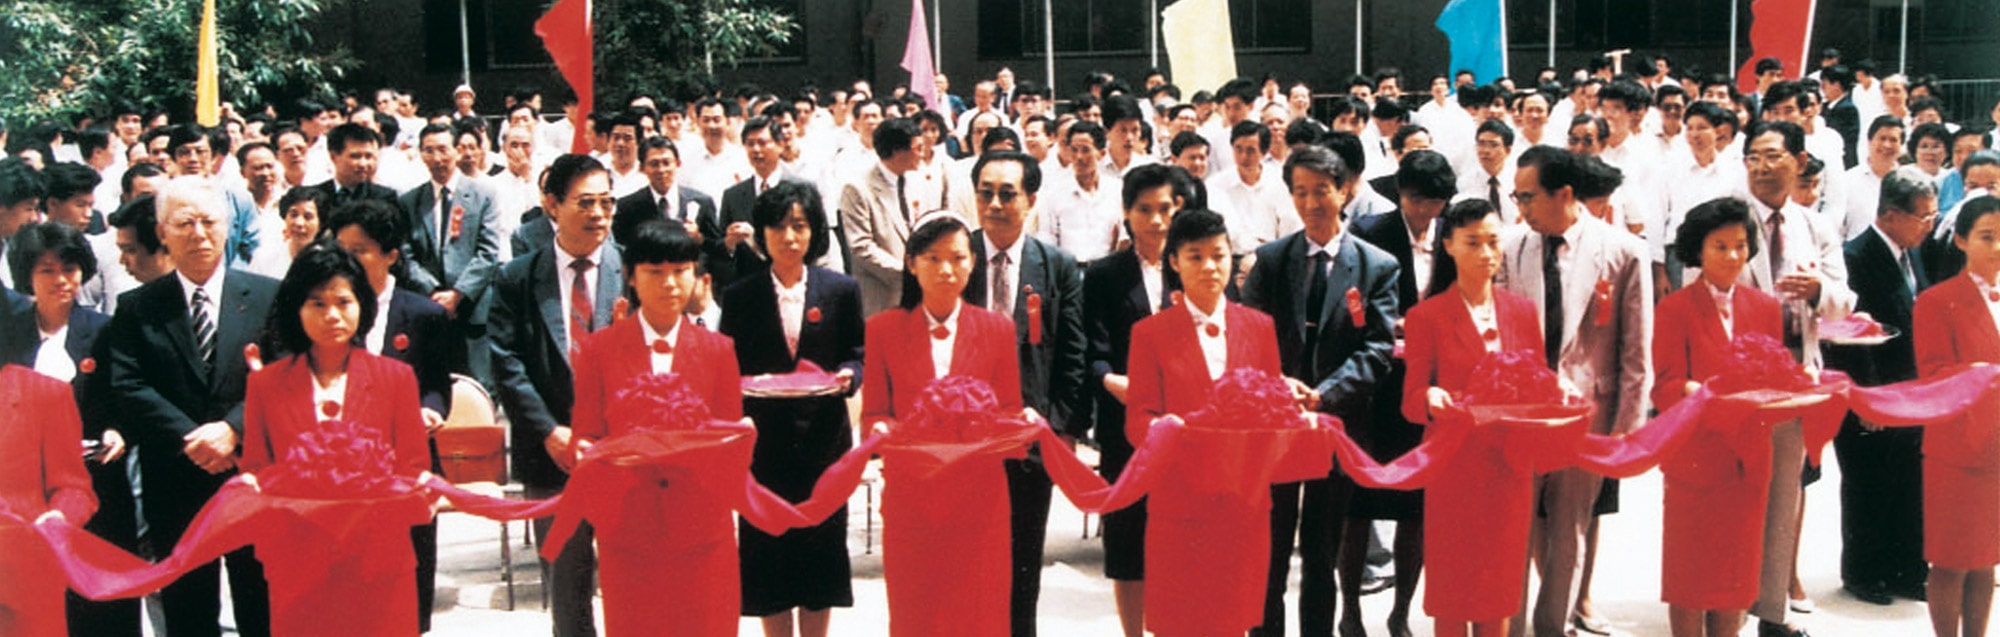 photo of the establishment ceremony in China